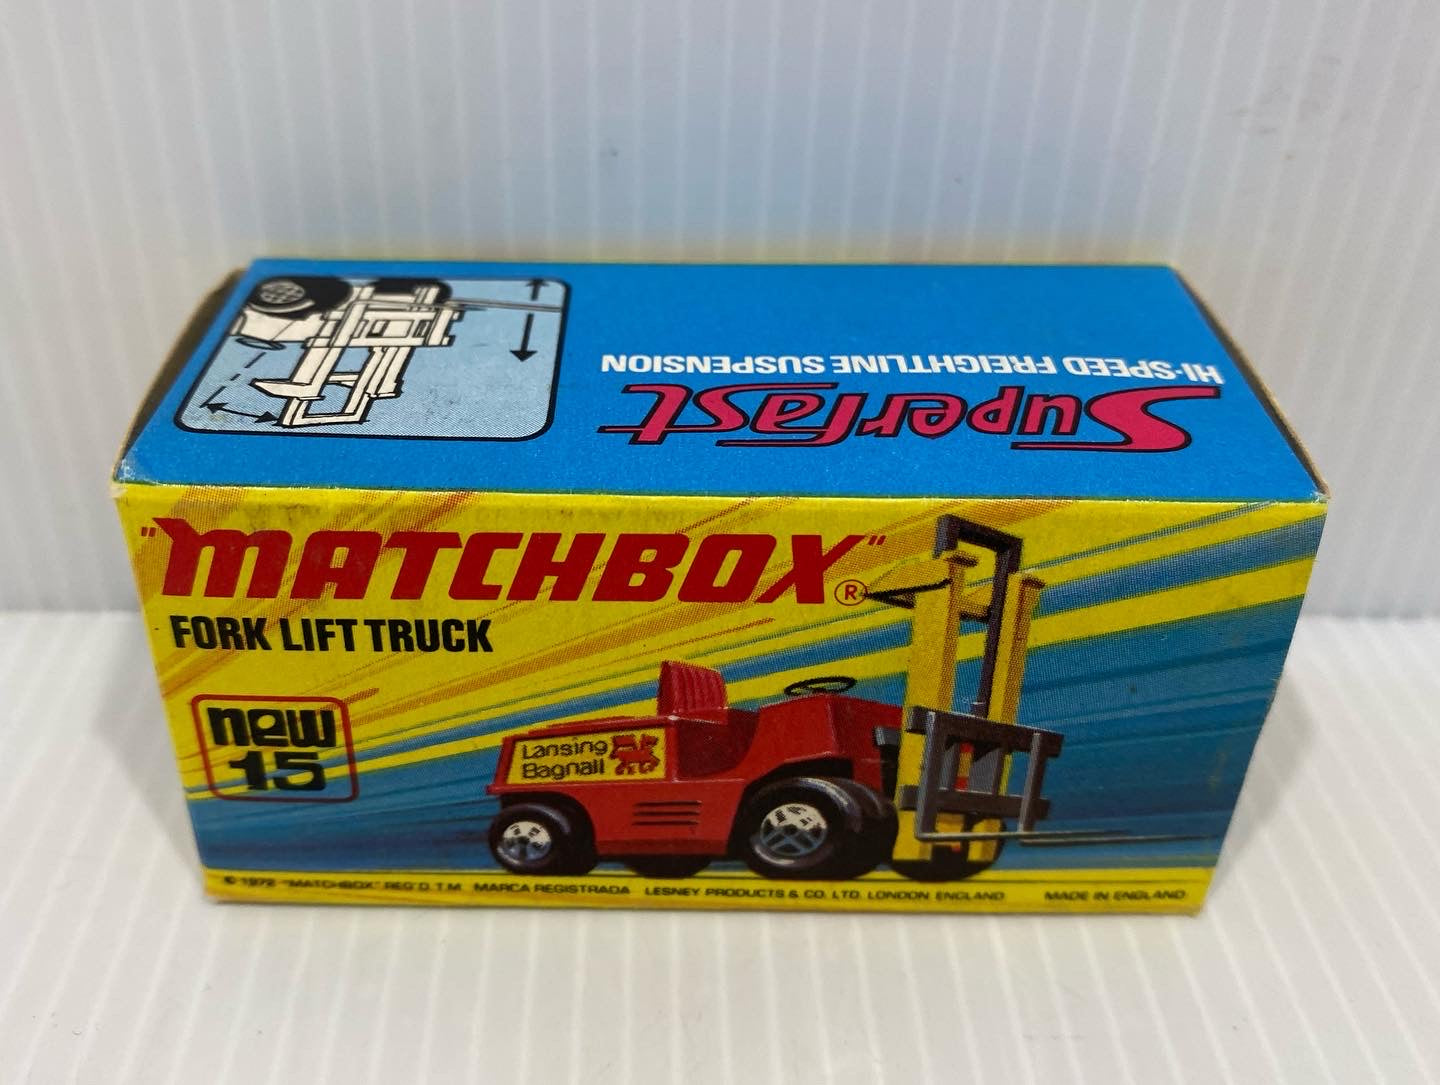 fork lift truck - Matchbox MB15 1973-1983. With original box